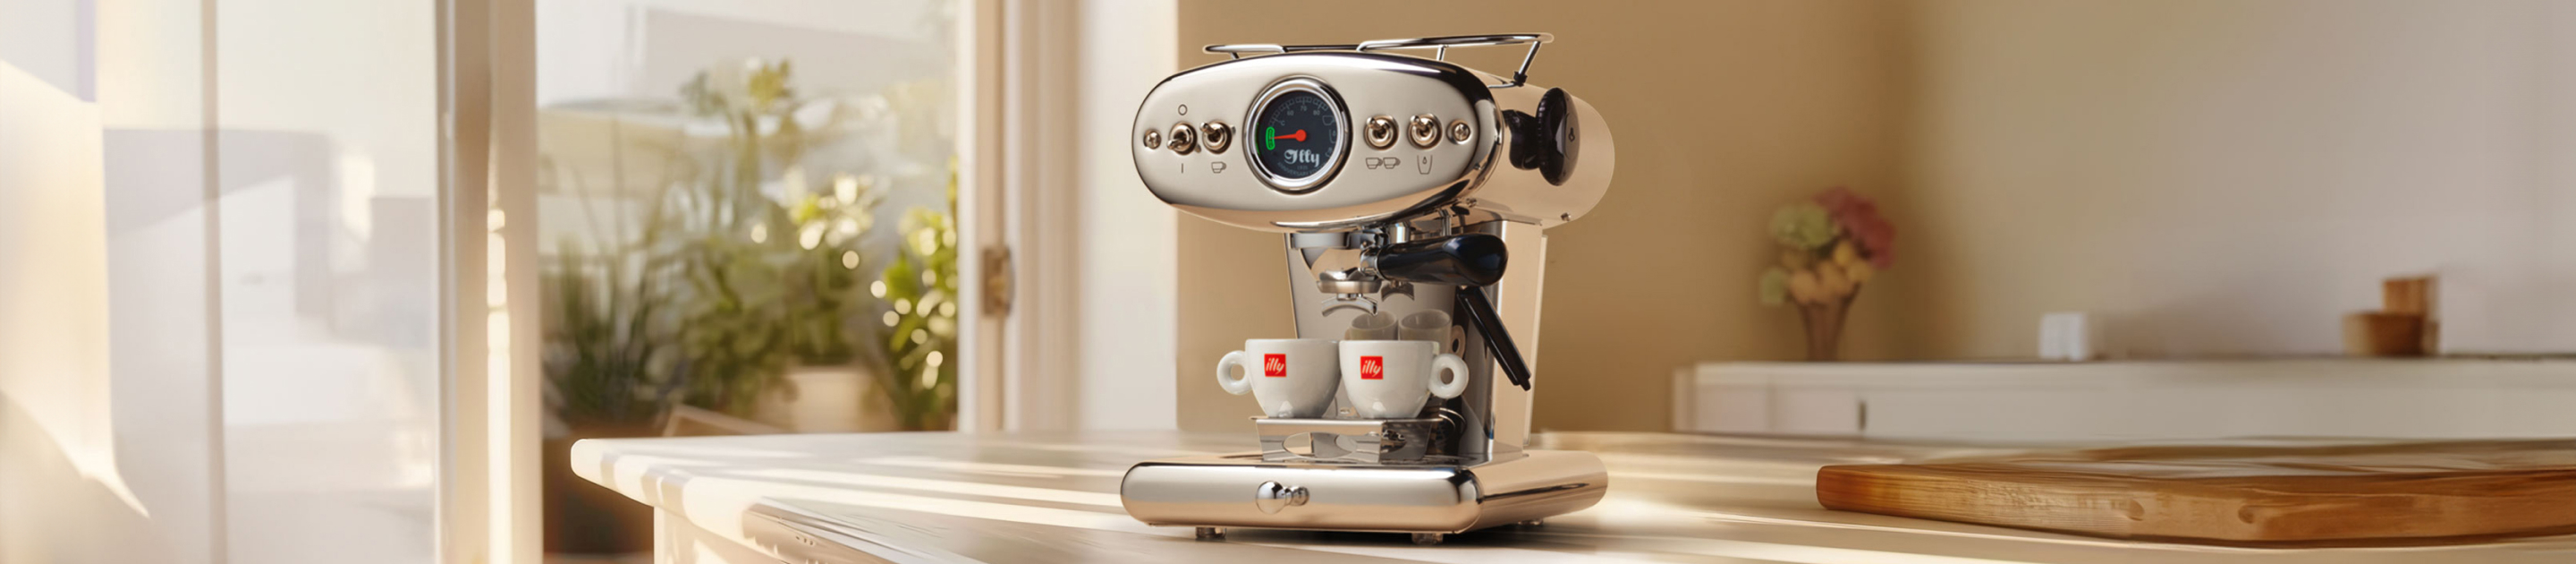 Maschinen für gemahlenen Kaffee und E.S.E.-Pads